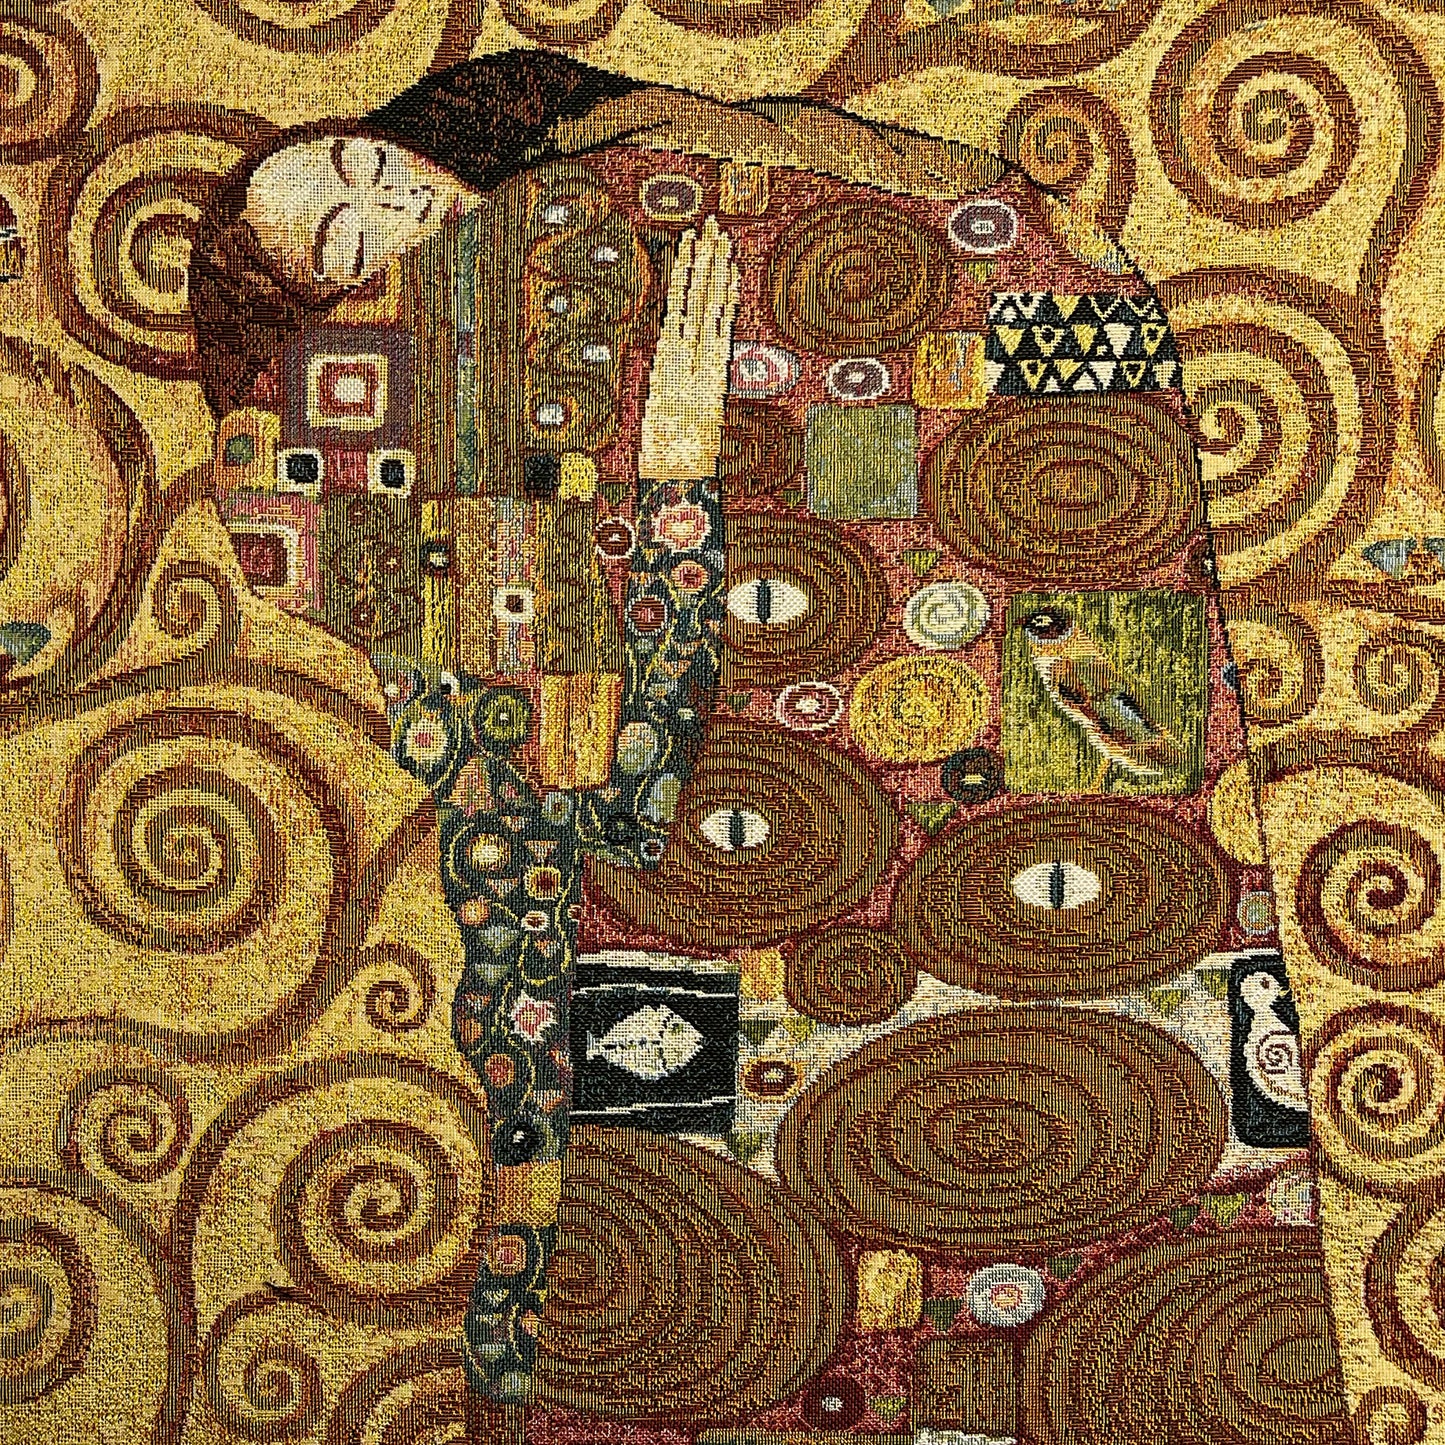 L'Abbraccio (Klimt)